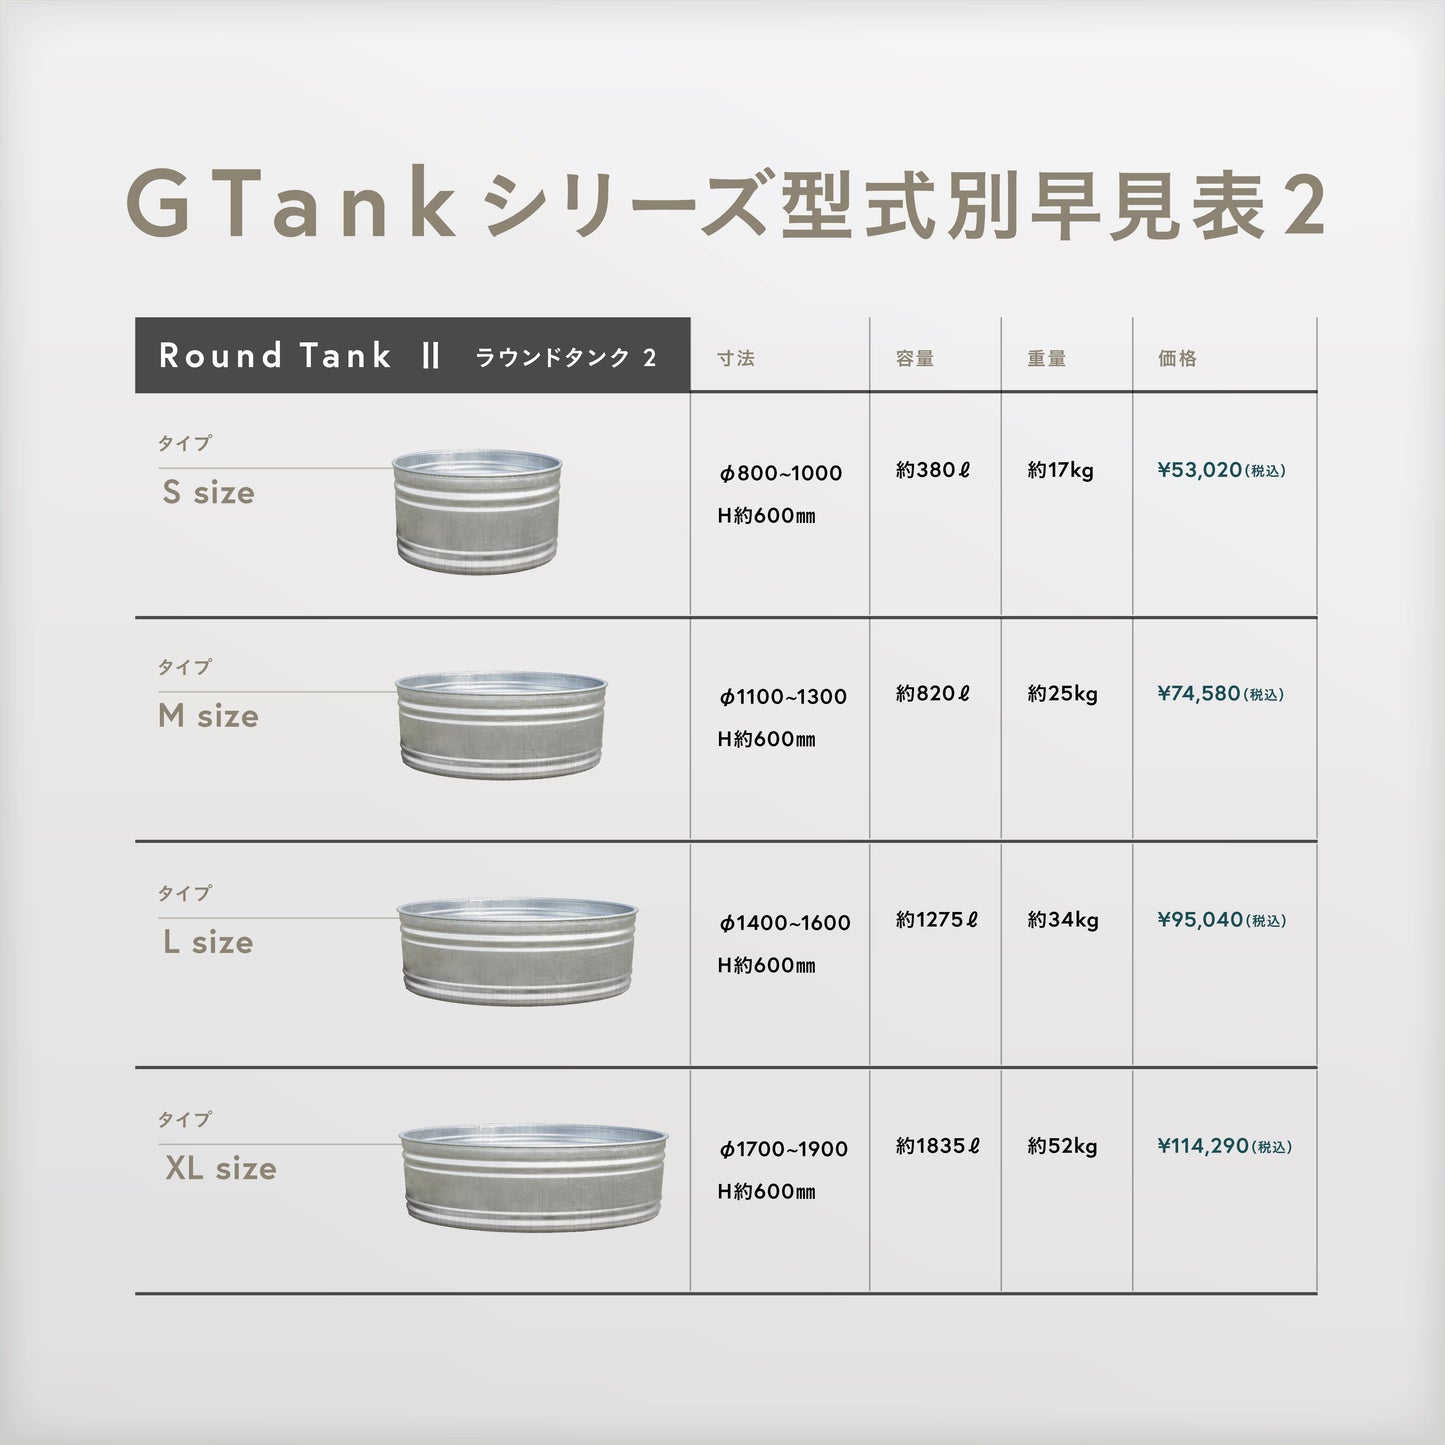 Gタンク／ラウンドタンク Ⅰ　S size